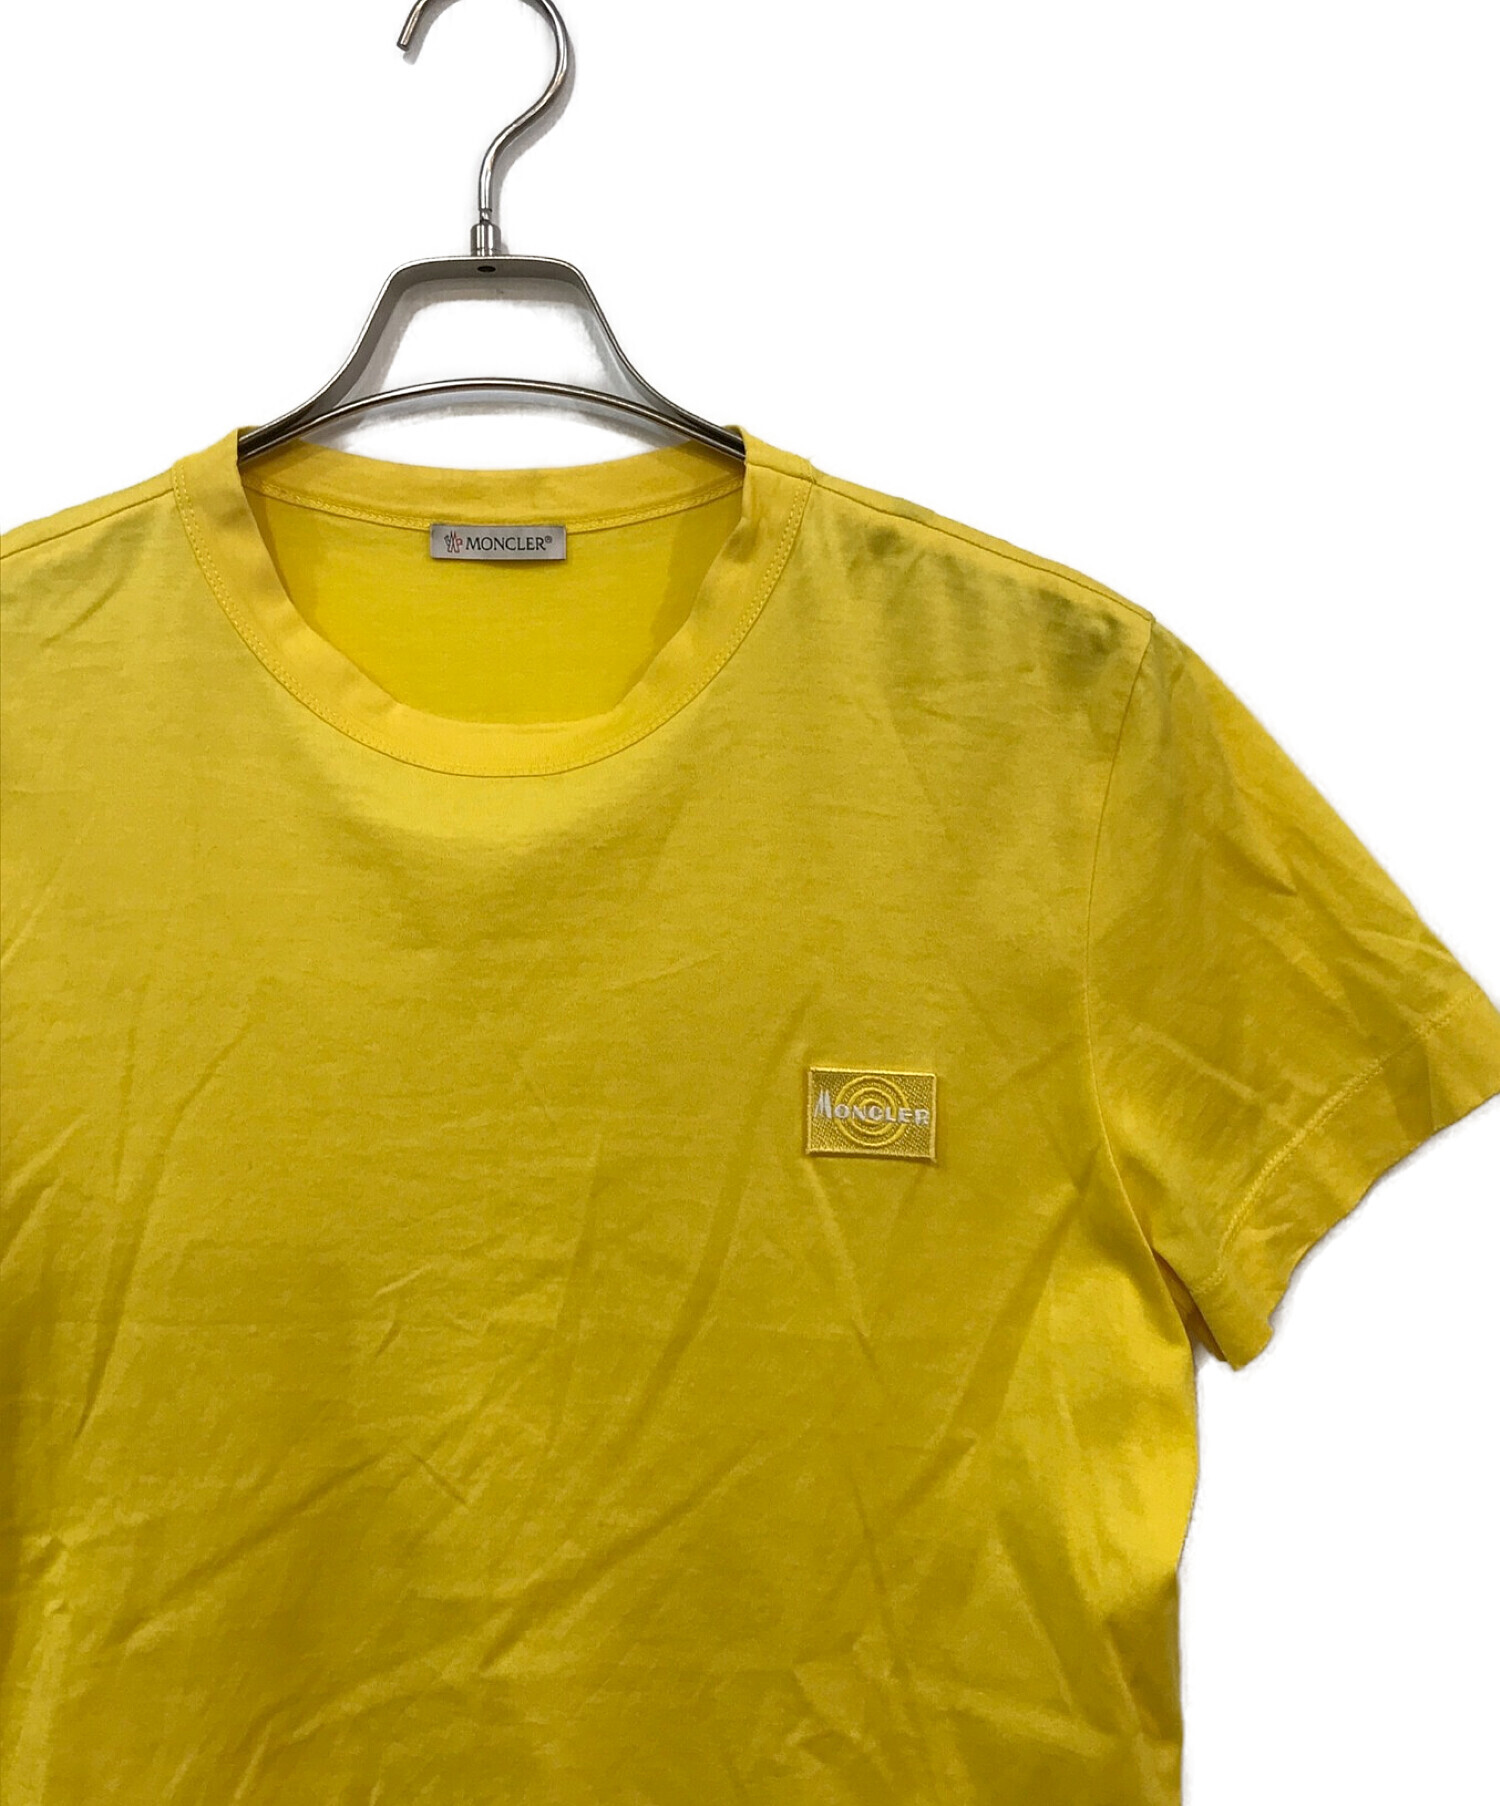 MONCLER (モンクレール) ロゴ刺繍UネックTシャツ イエロー サイズ:M